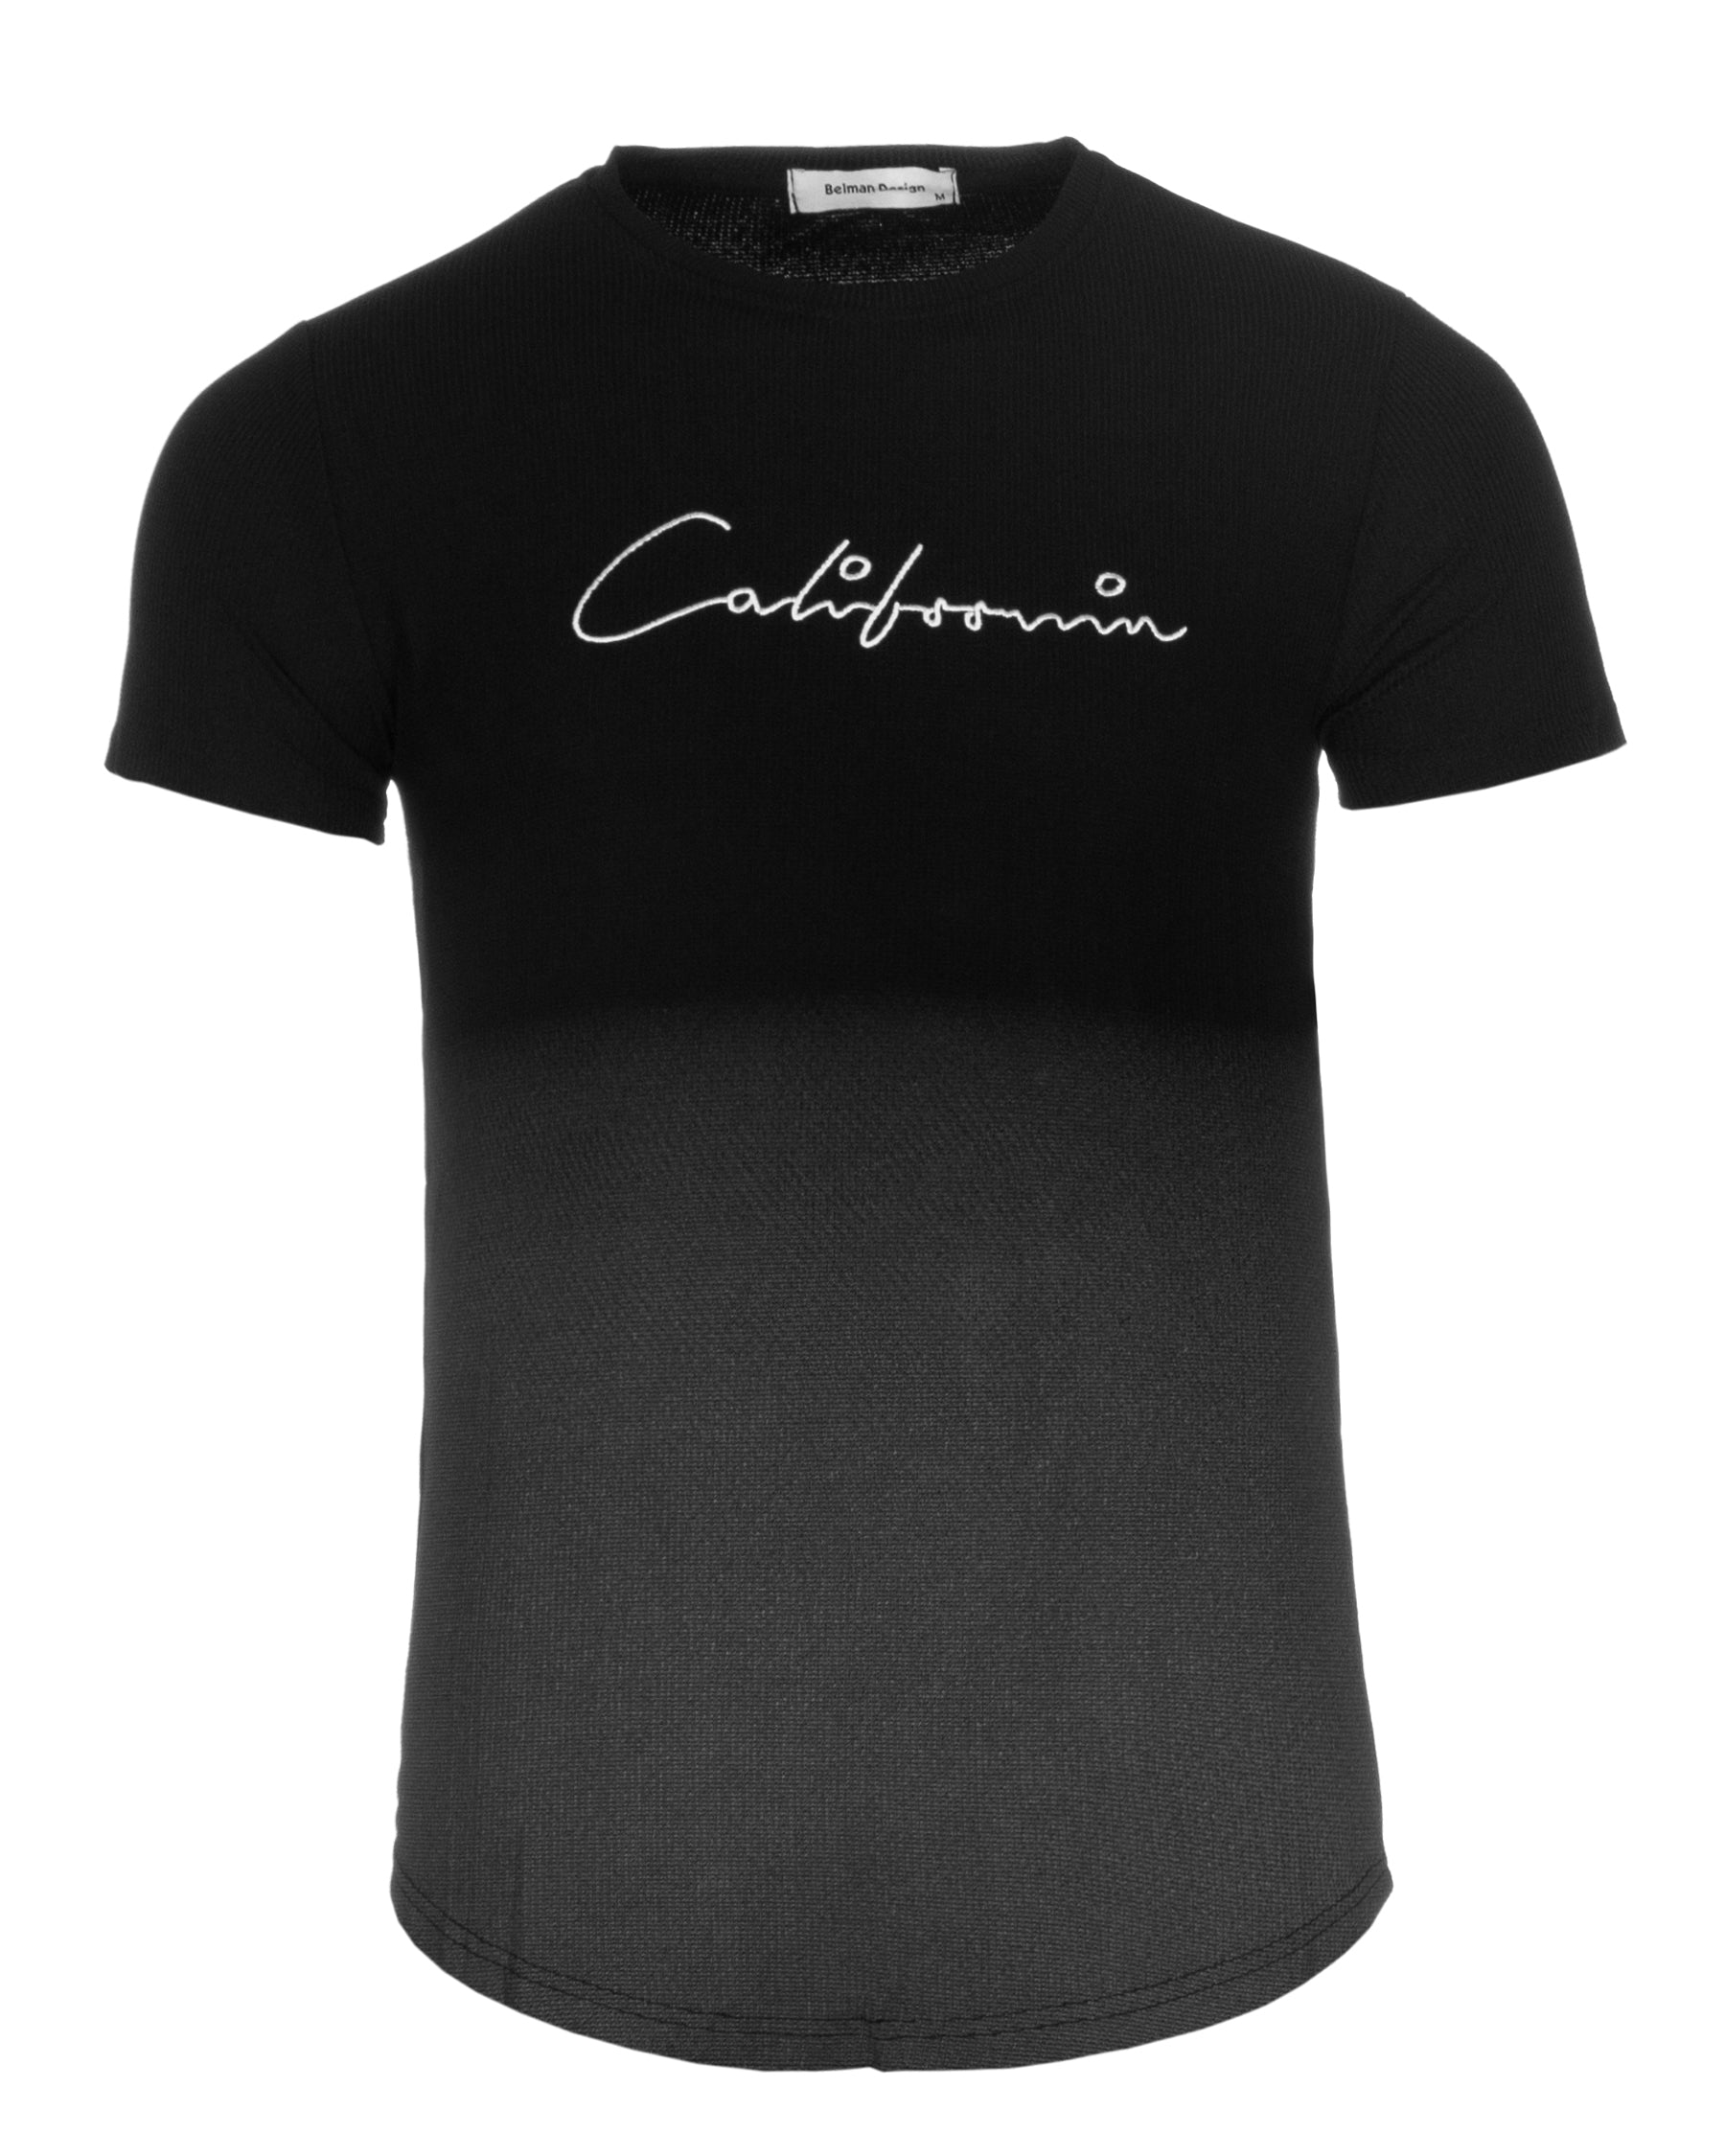 California t-shirt - Black